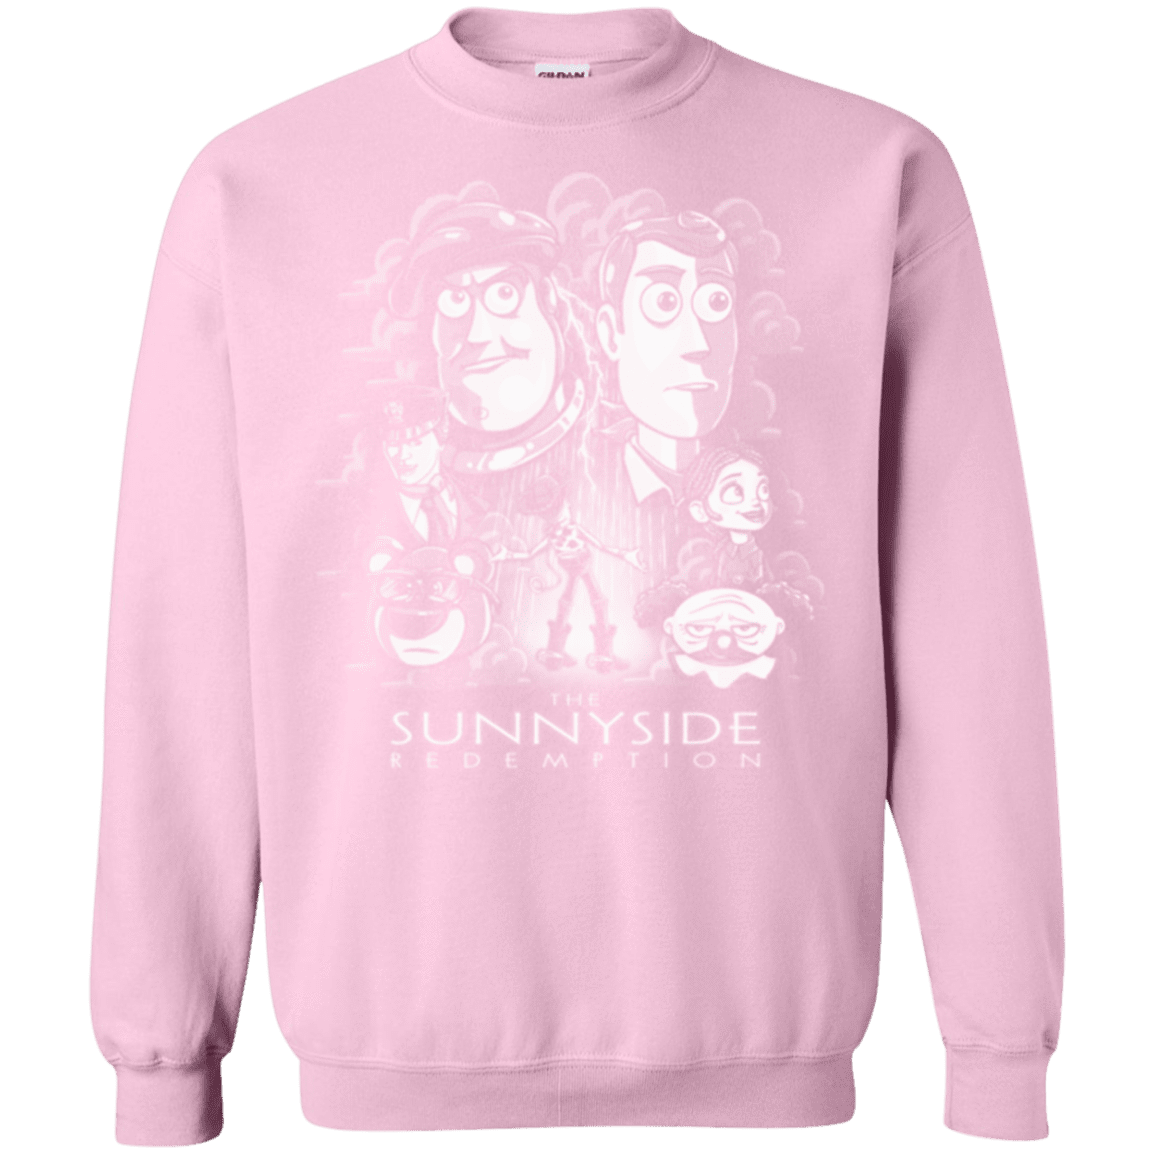 Sweatshirts Light Pink / Small The Sunnyside Redemption Crewneck Sweatshirt